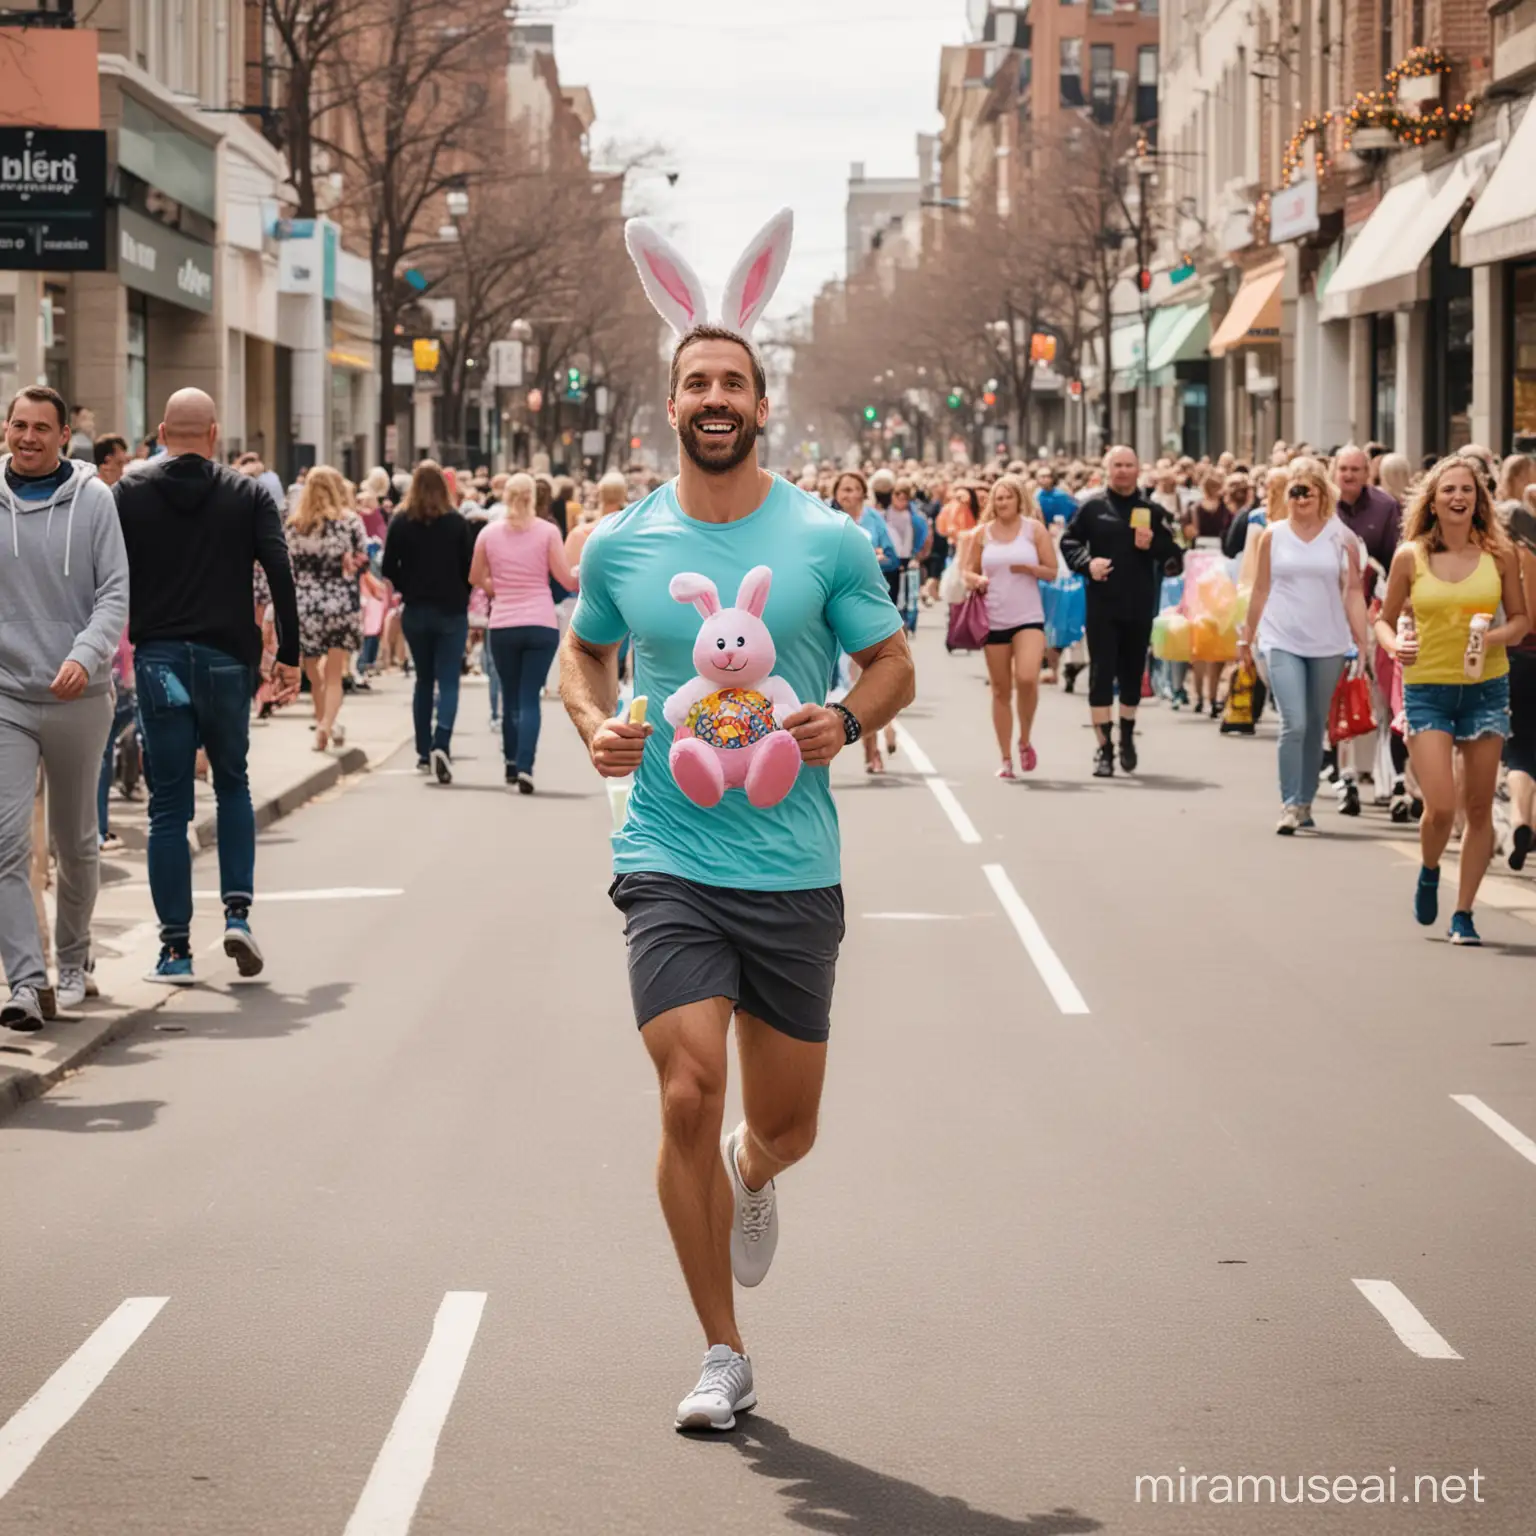 Joyful Easter Celebration Man Running with Shopping Bag